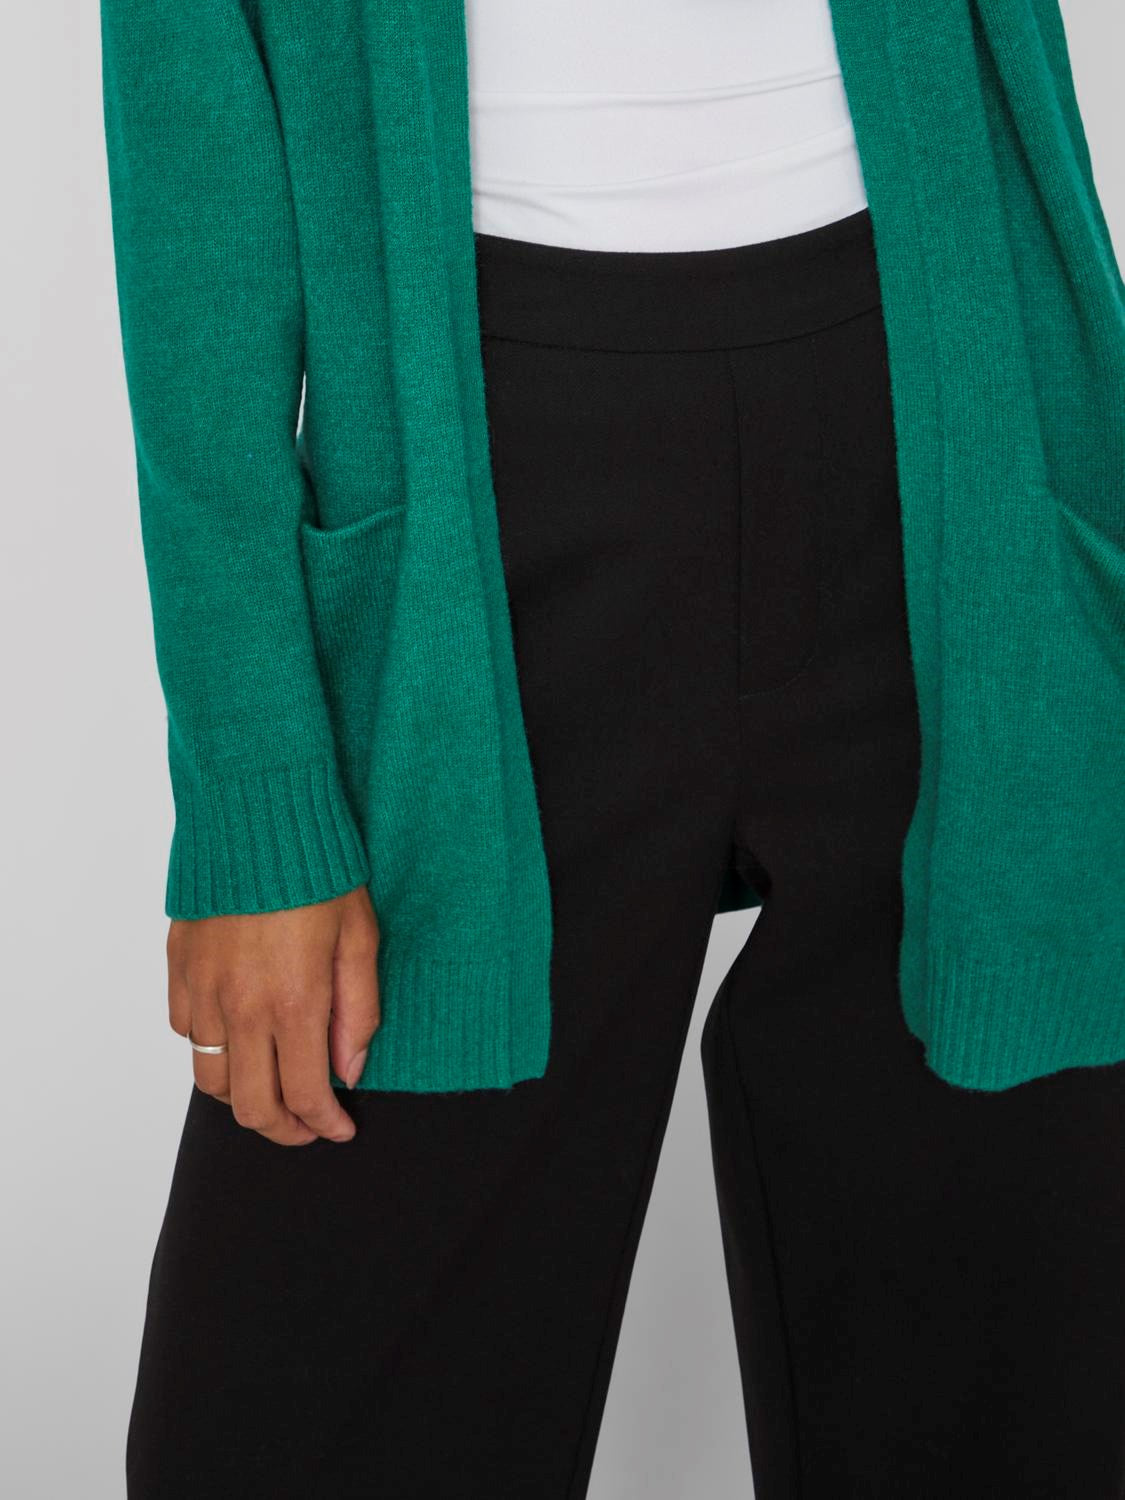 VIRil Open L/S Knit Cardigan Ultramarine Green